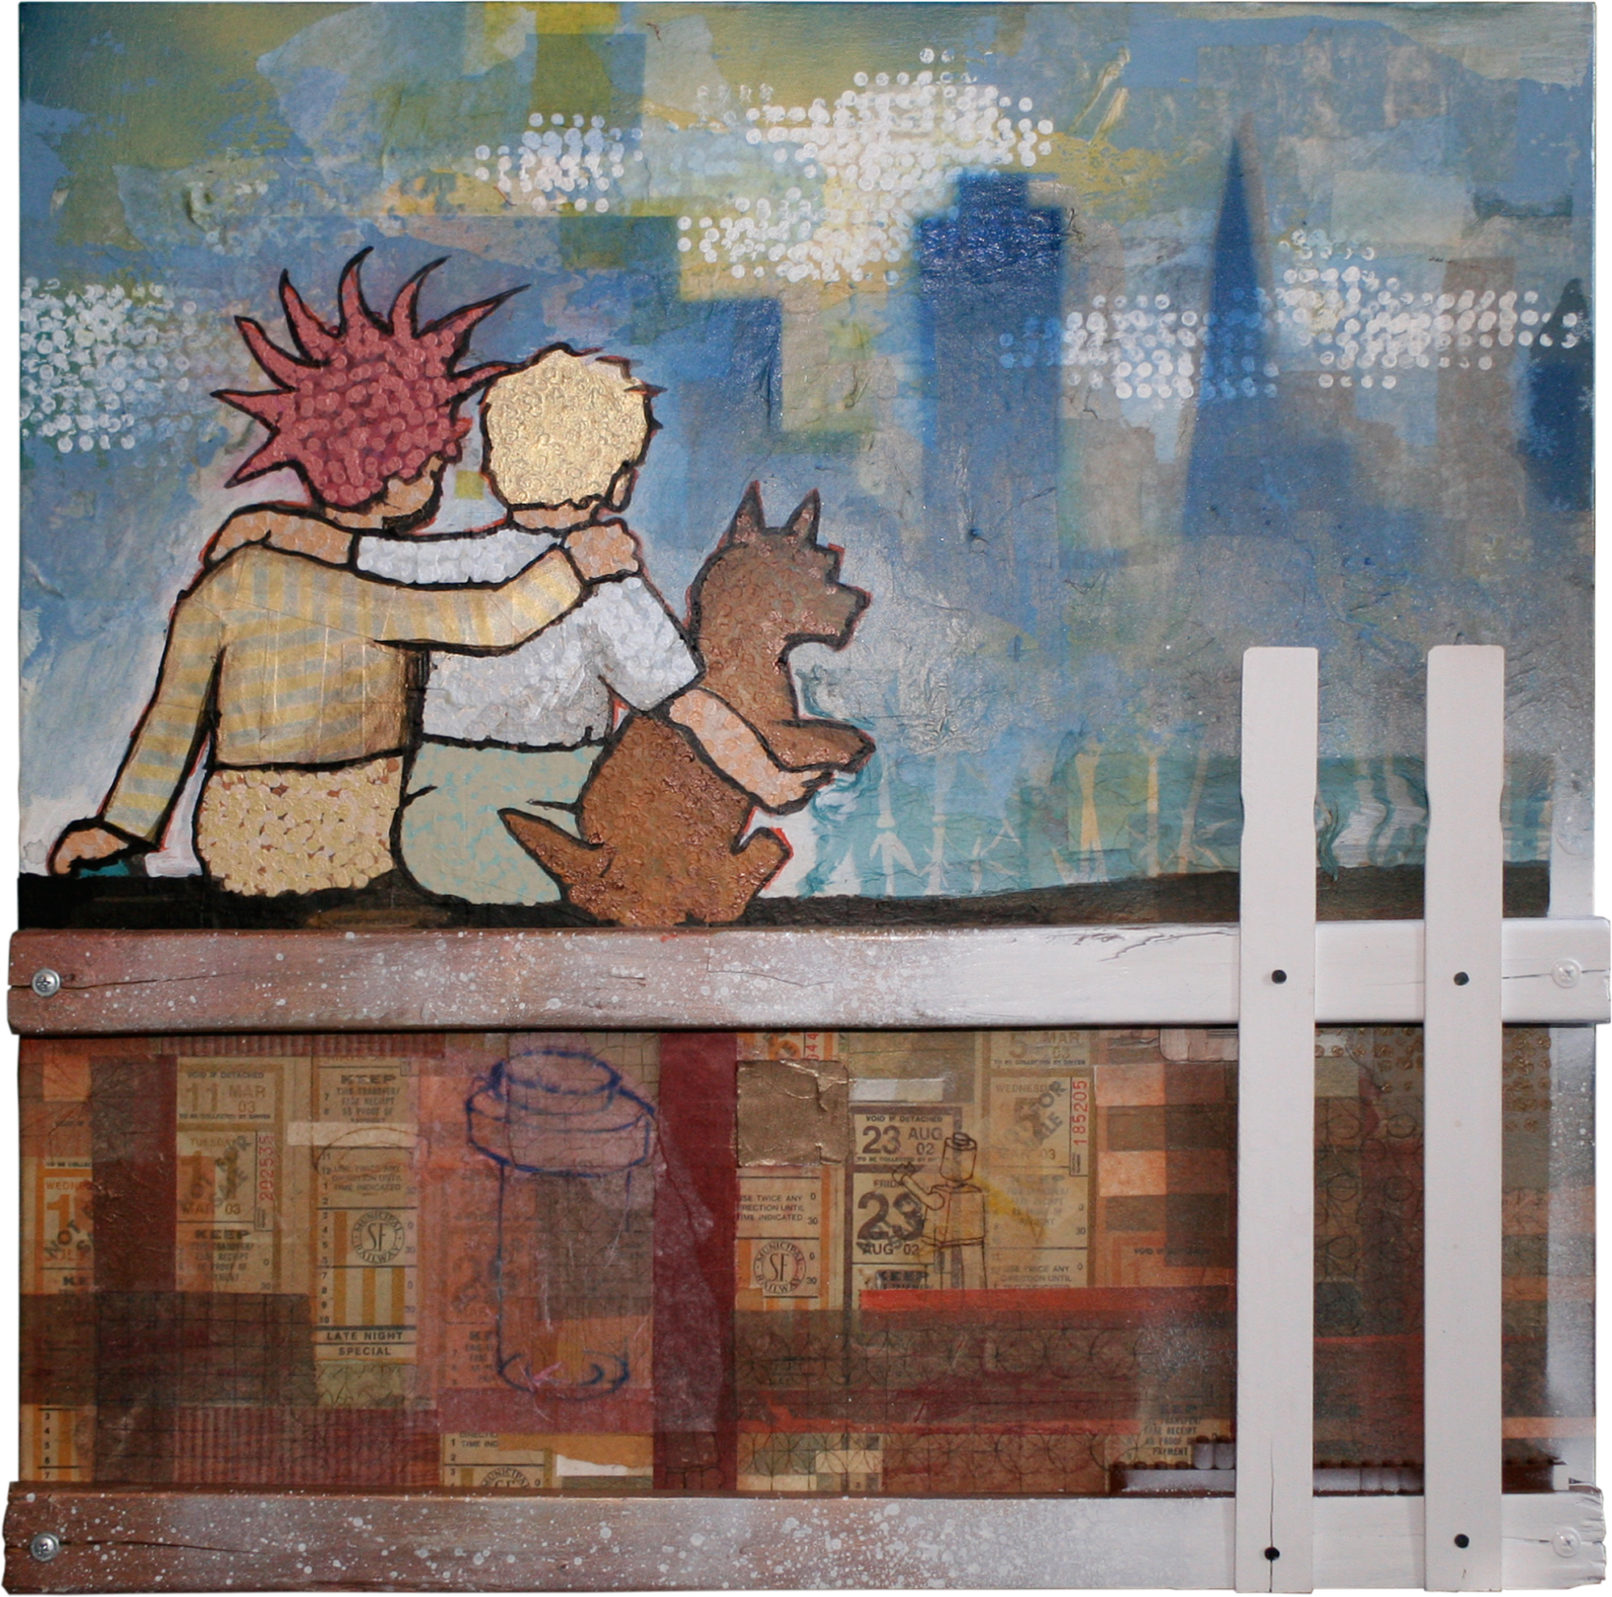 Off-The-Fence-boys-dog-SF-skyline-wood-napkins-art-painting-pixelstud